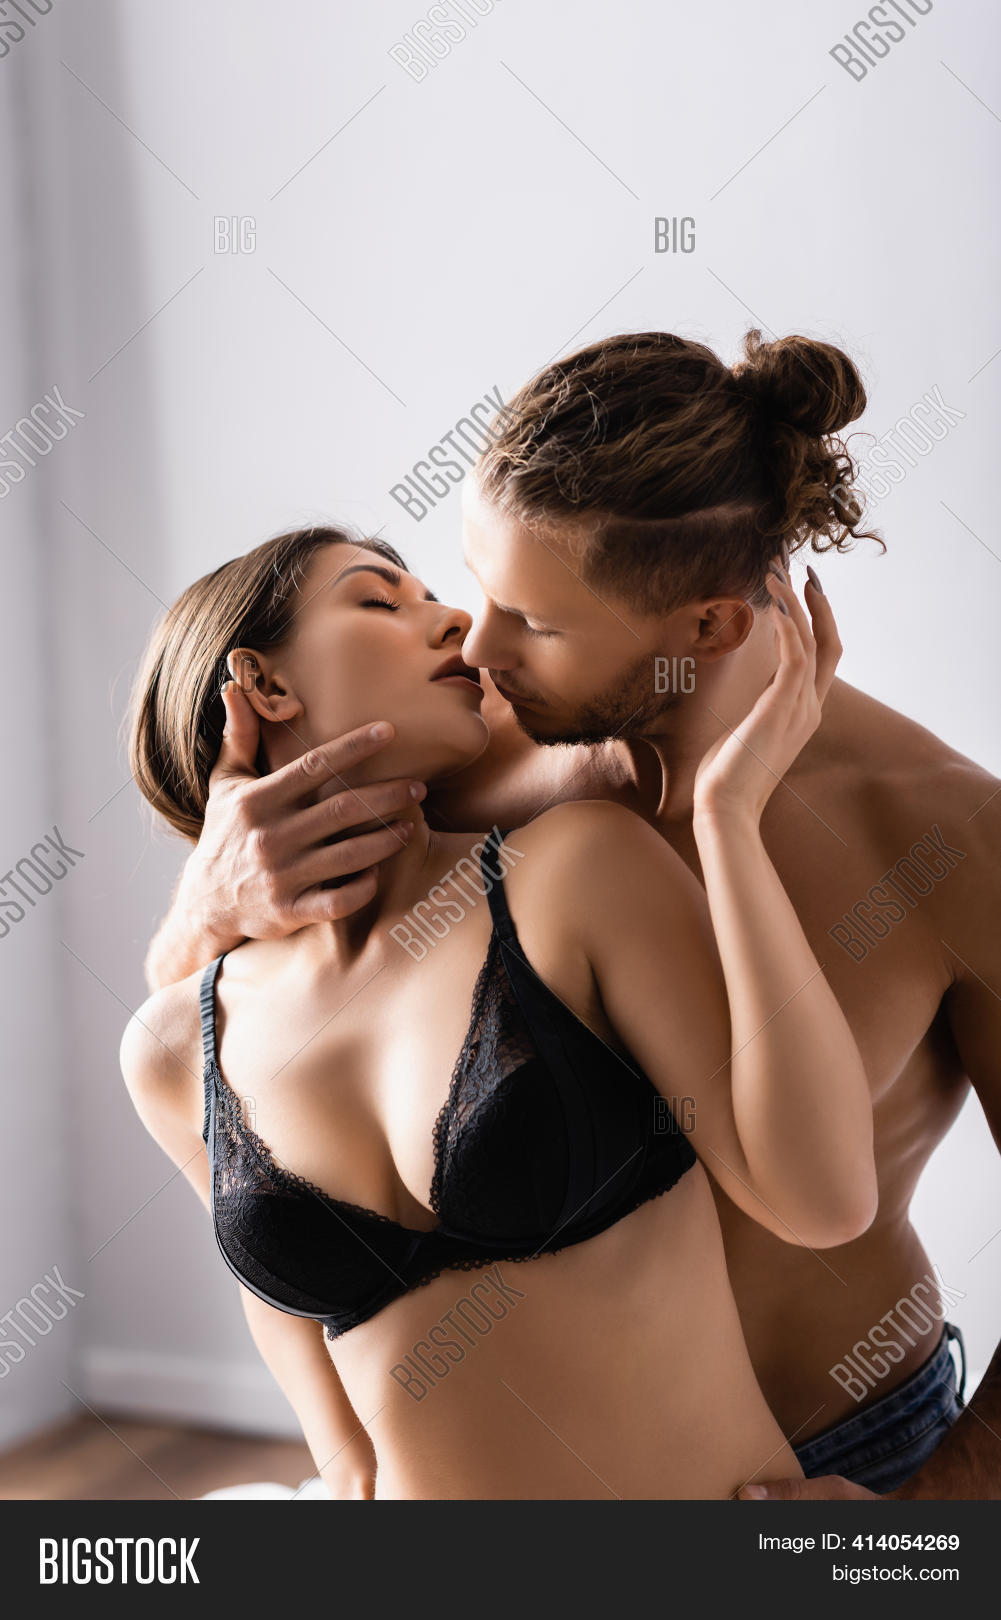 bill moriarty share sexy hot kiss photos